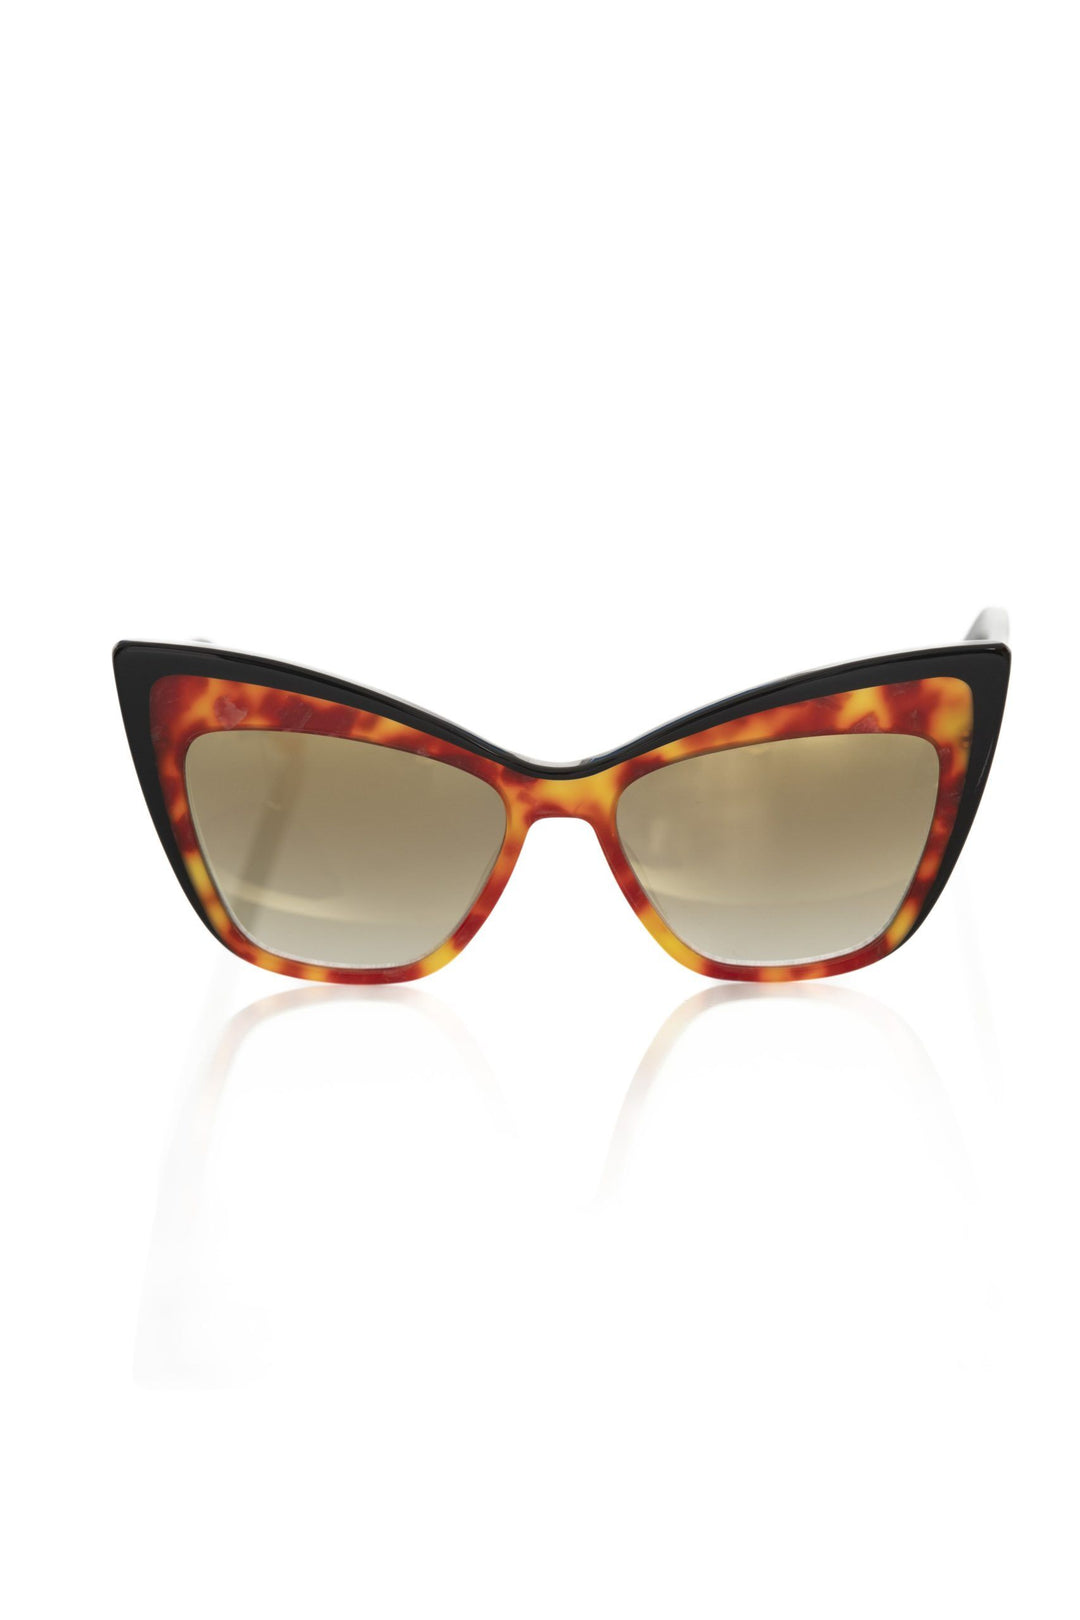 Frankie Morello Chic Tortoiseshell Cat Eye Sunglasses